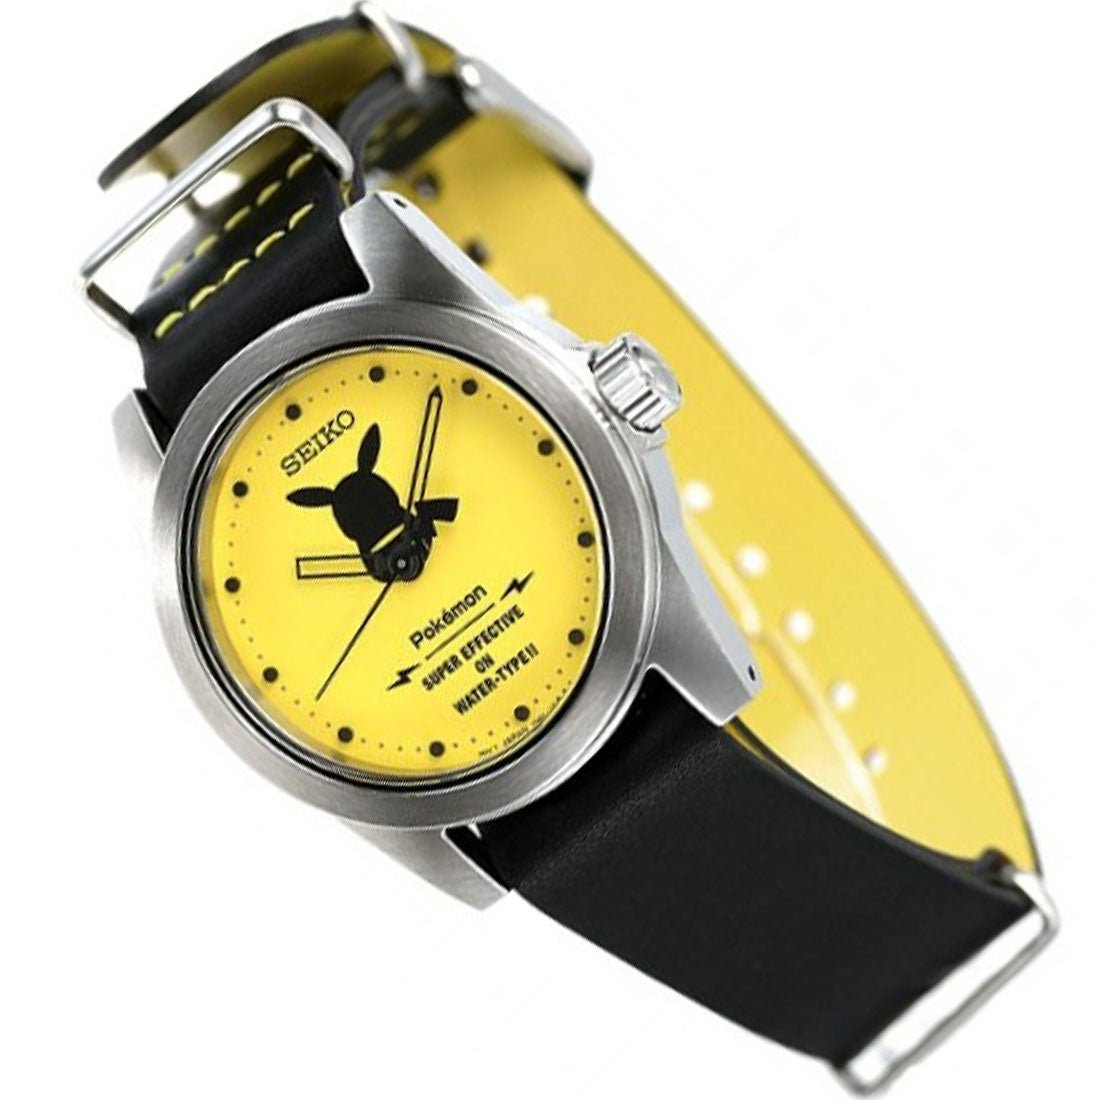 Seiko JDM SCXP175 Pikachu Pokemon Limited Edition Leather Watch -Seiko